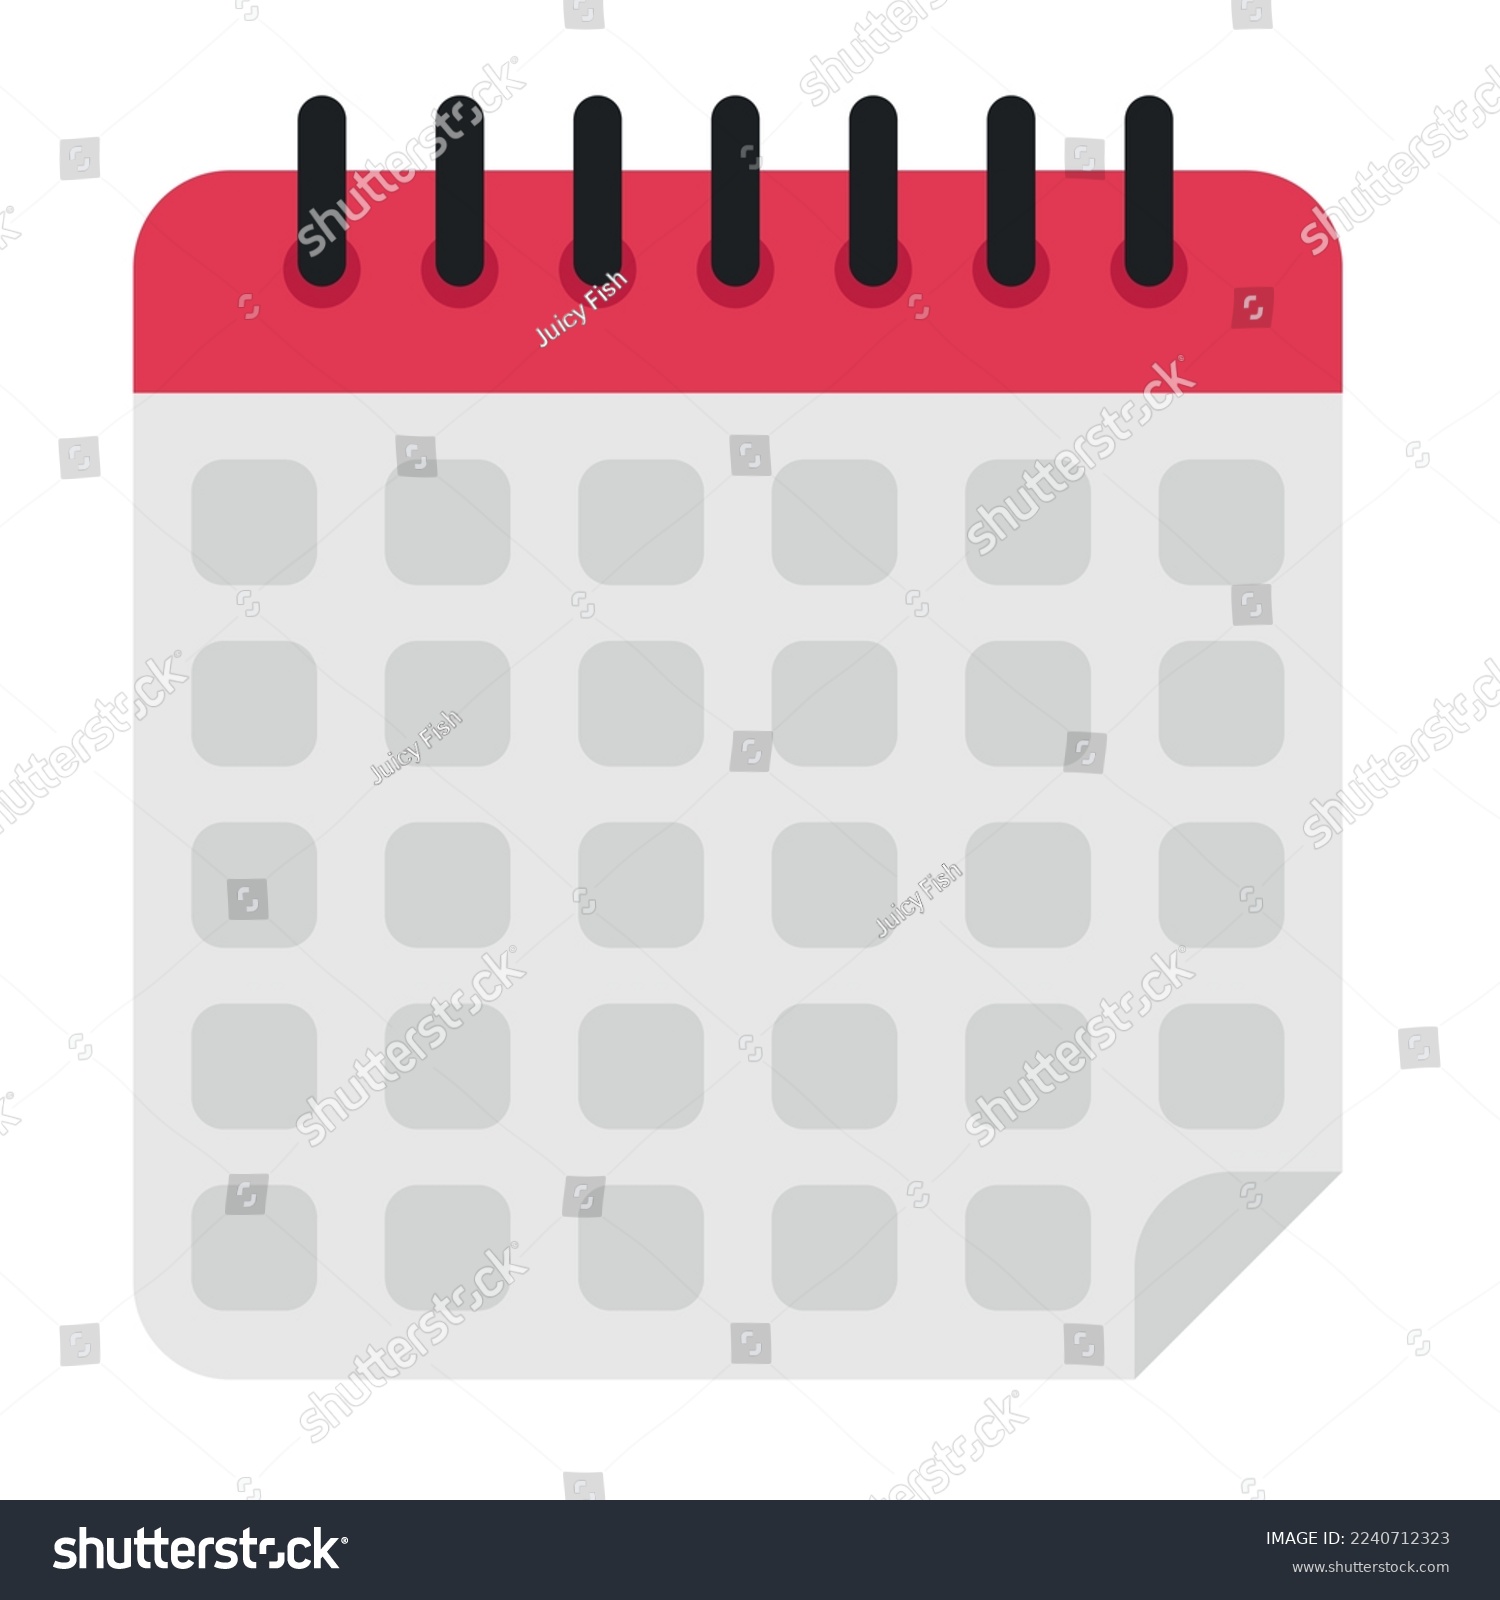 SVG of Red Calendar On White Background Vectorart svg